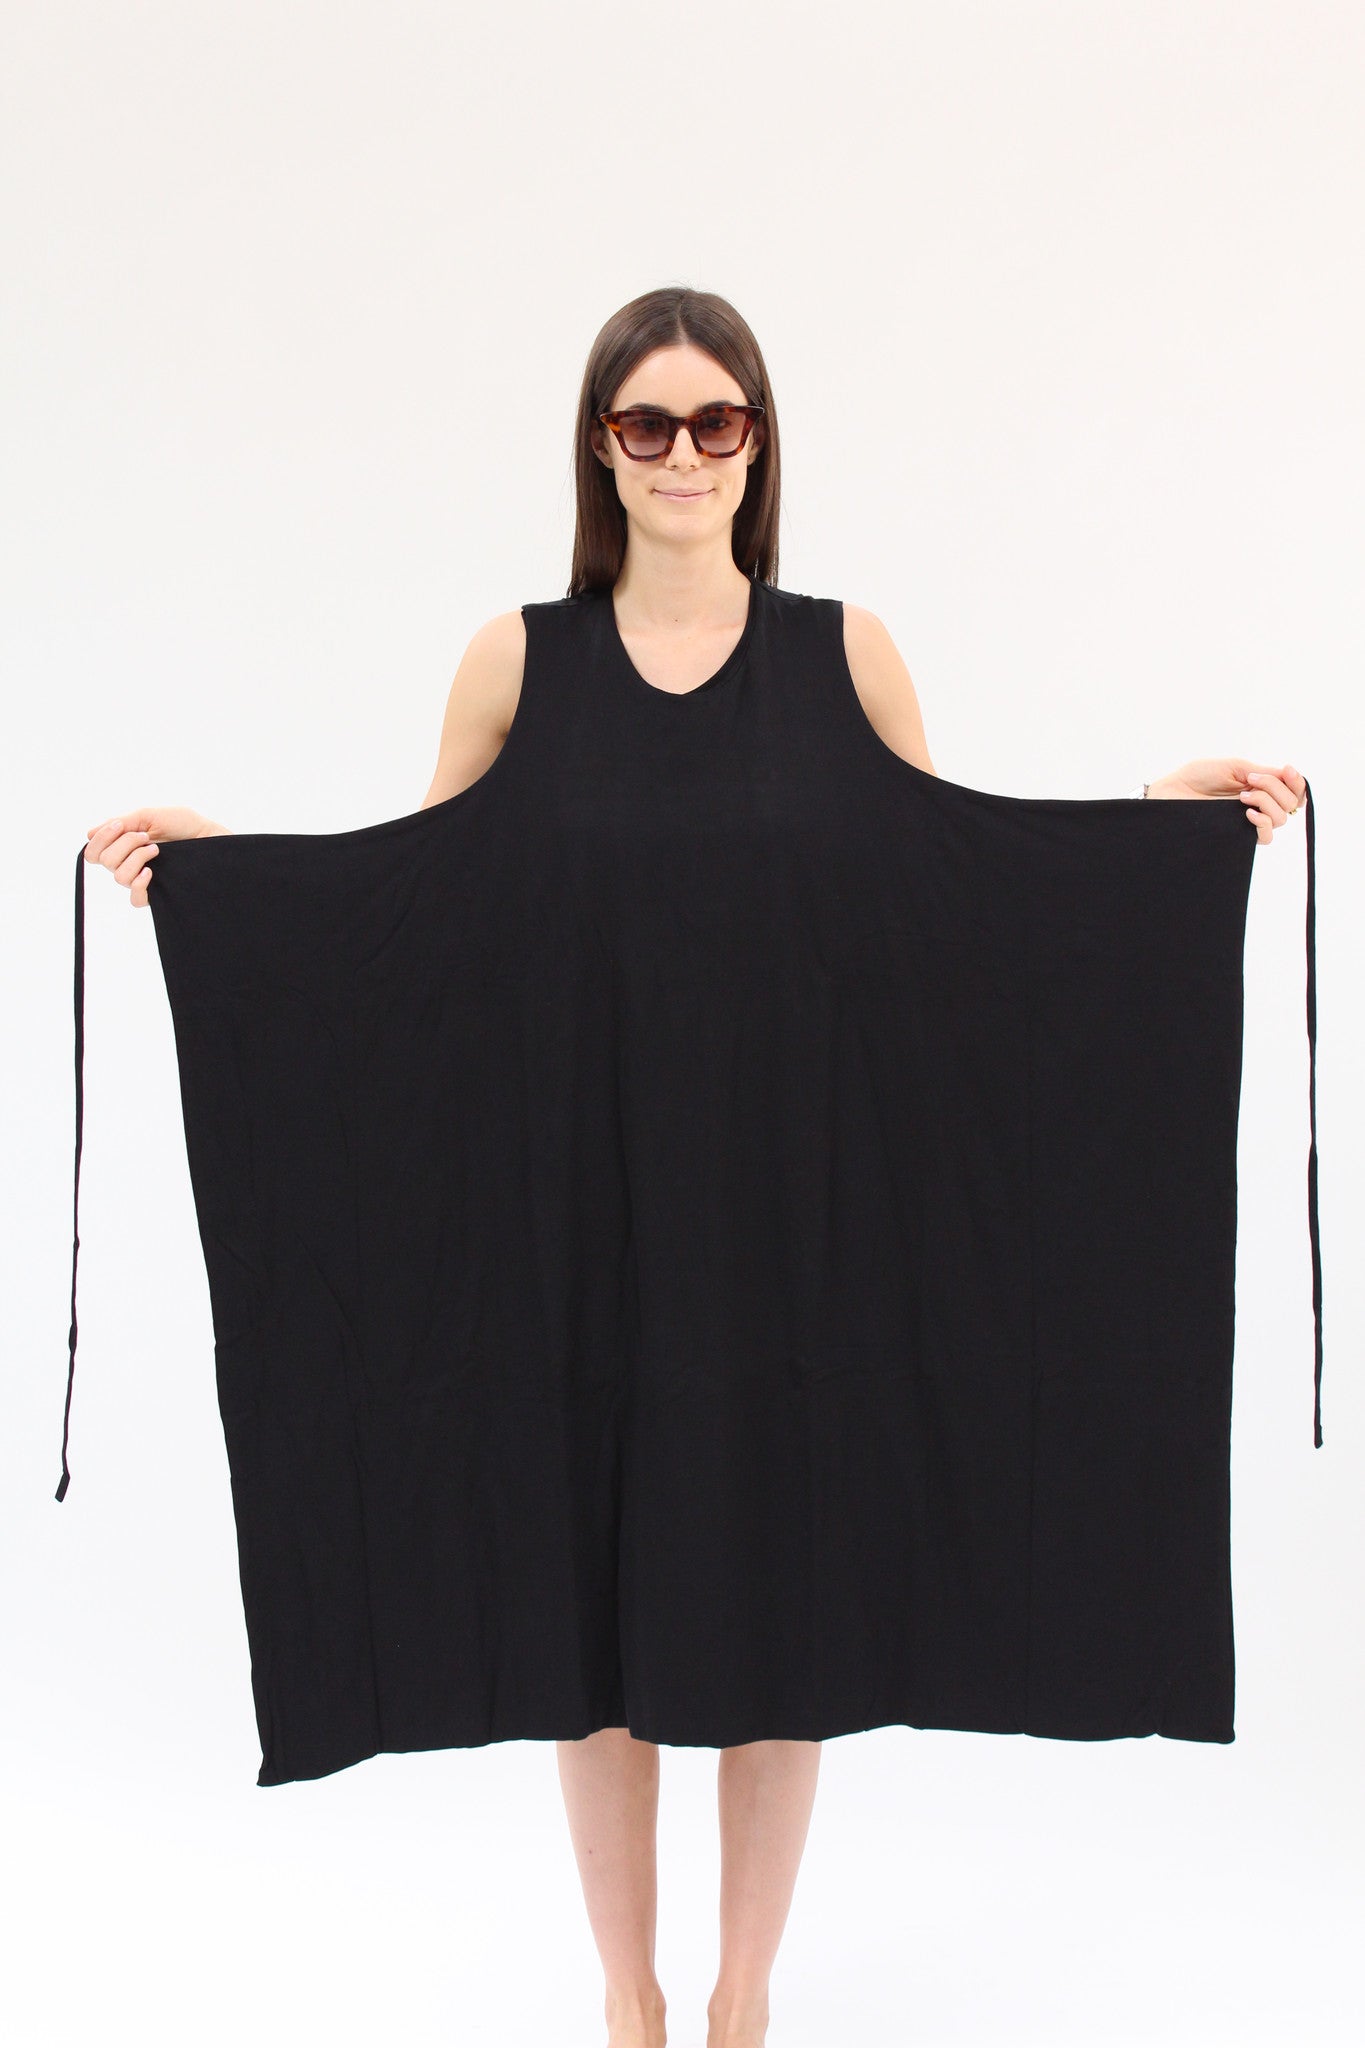 Kowtow Envelope Dress Black / Beklina